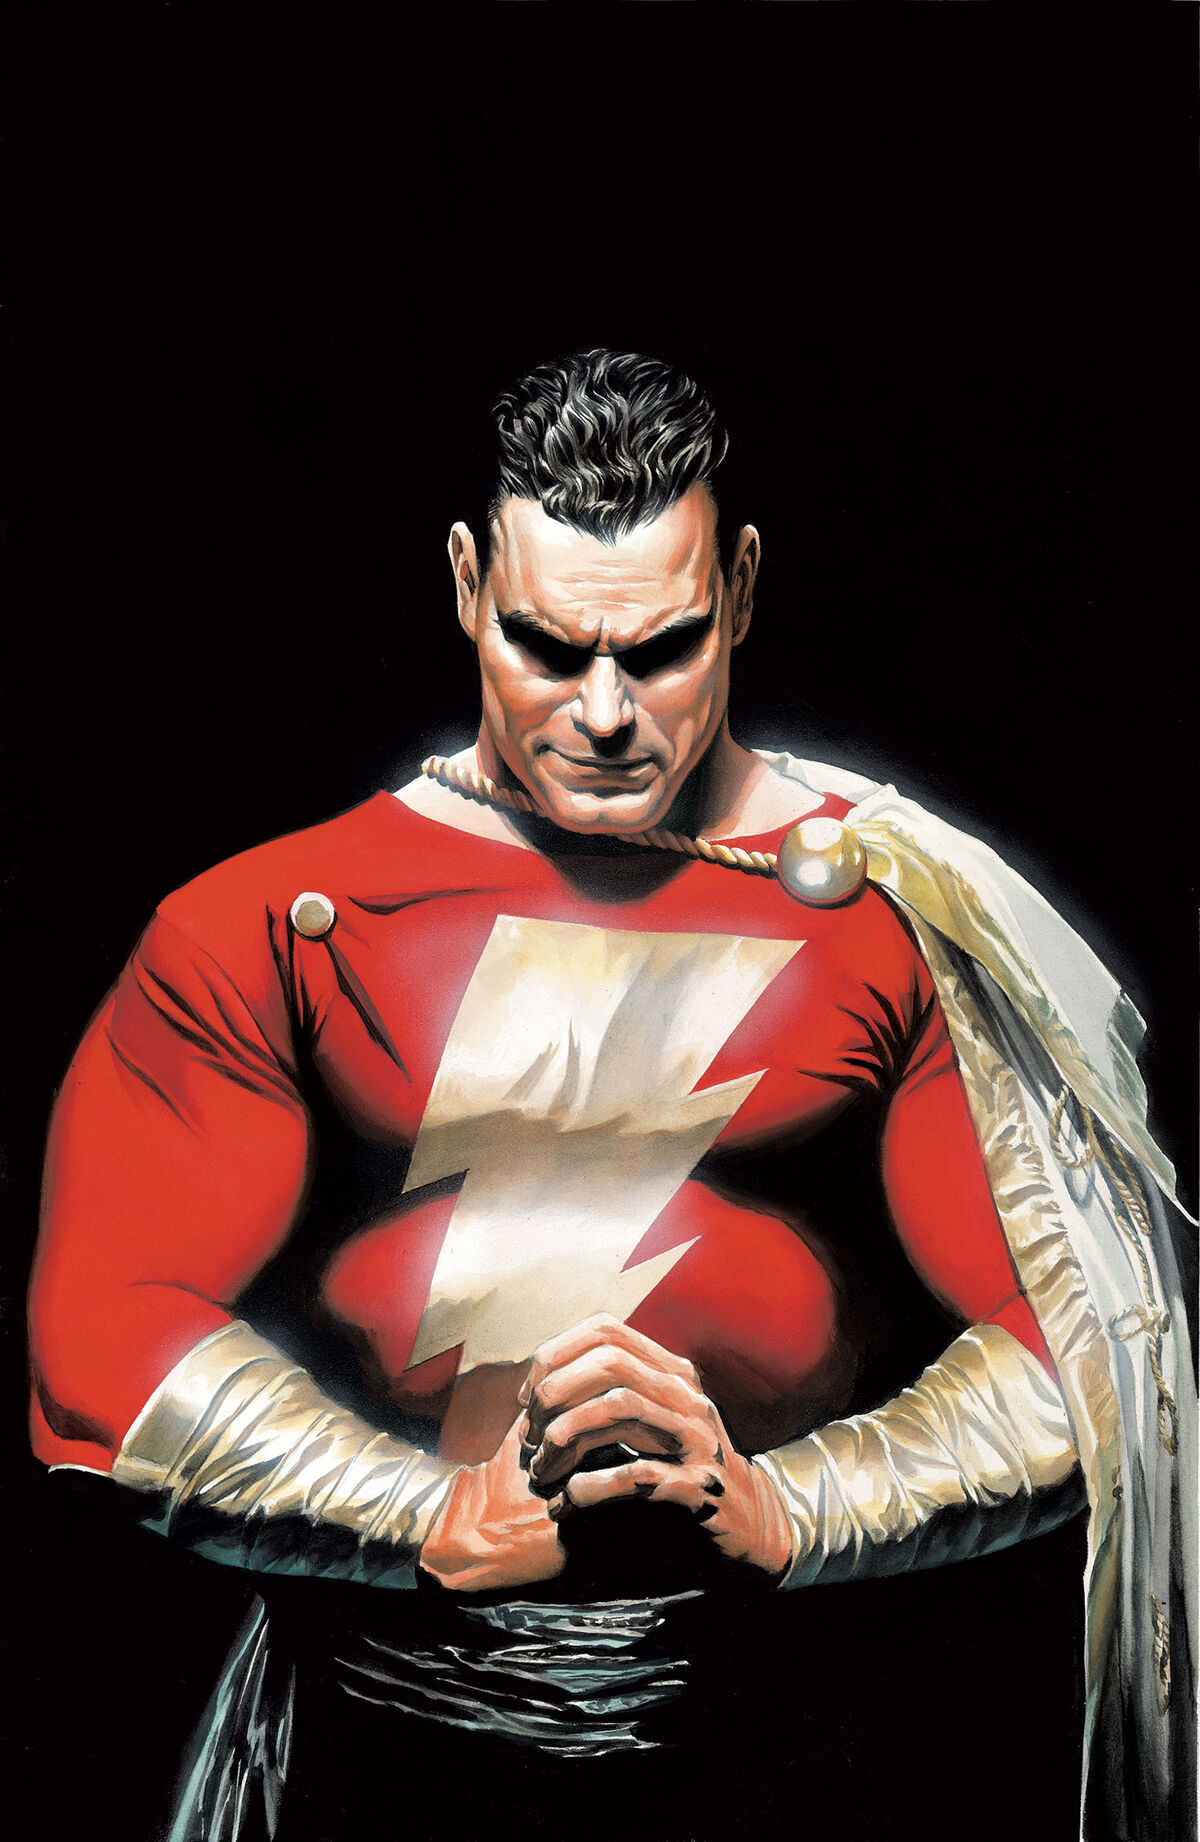 Captain Marvel (DC Comics) - Wikipedia